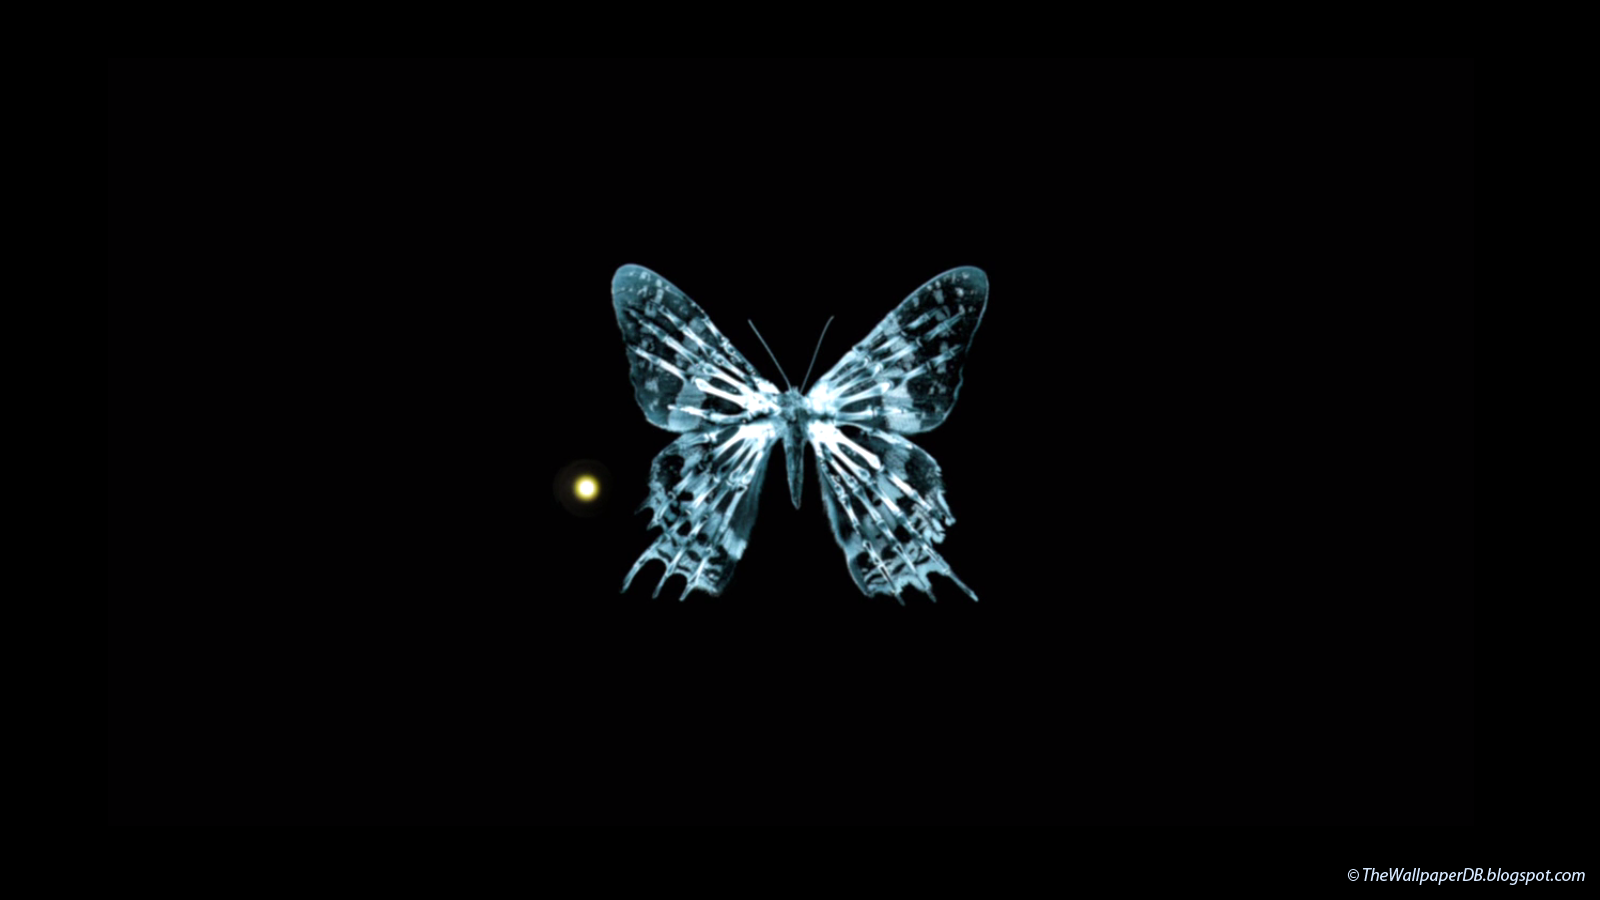  wallpaperwallpaper spring butterflies animated wallpaper download